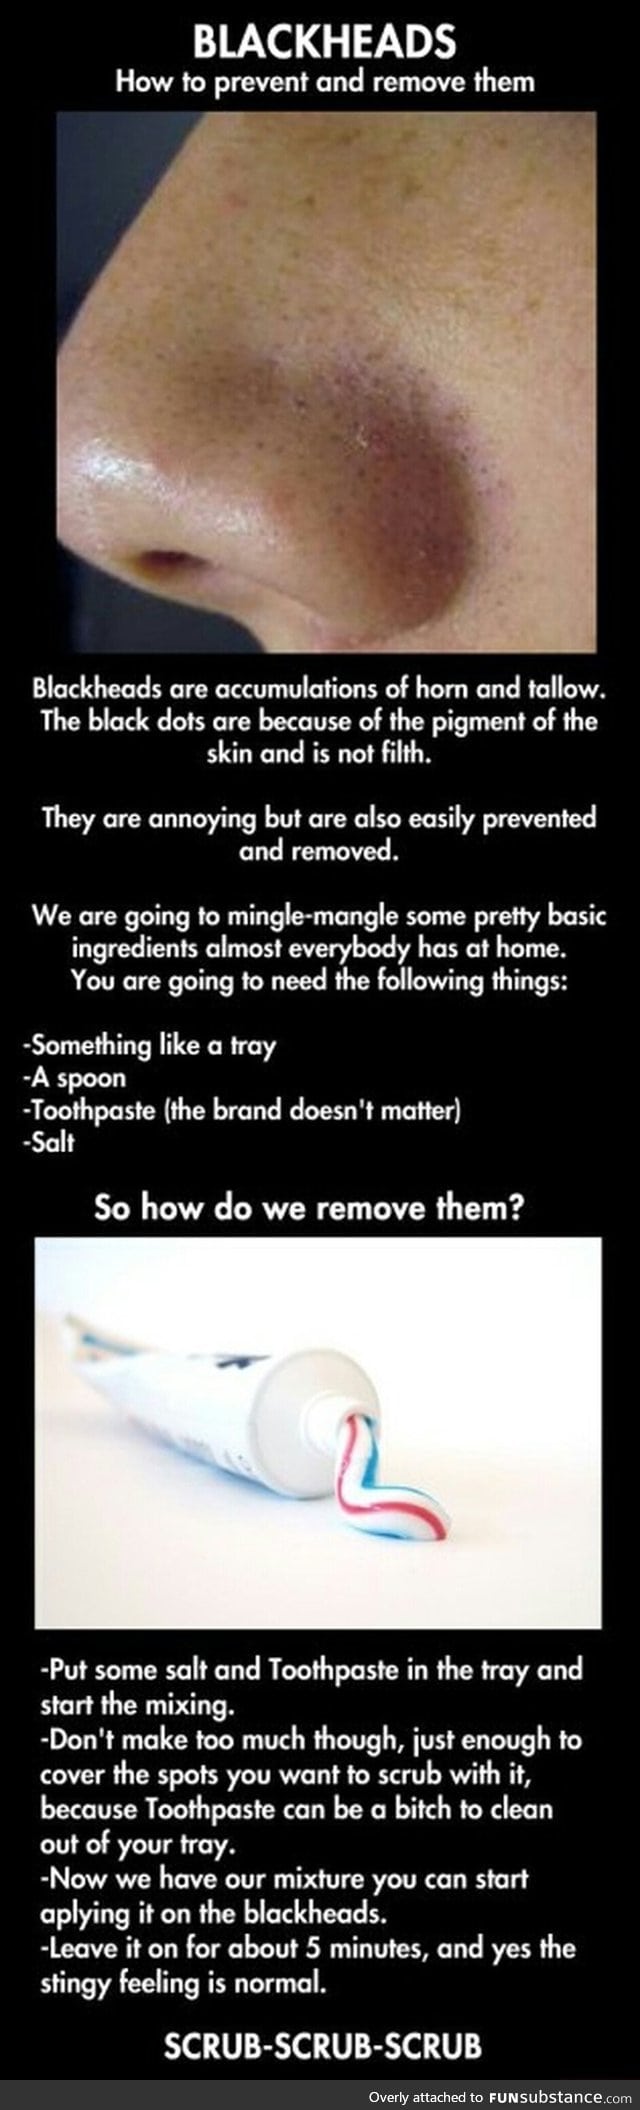 How to remove blackheads